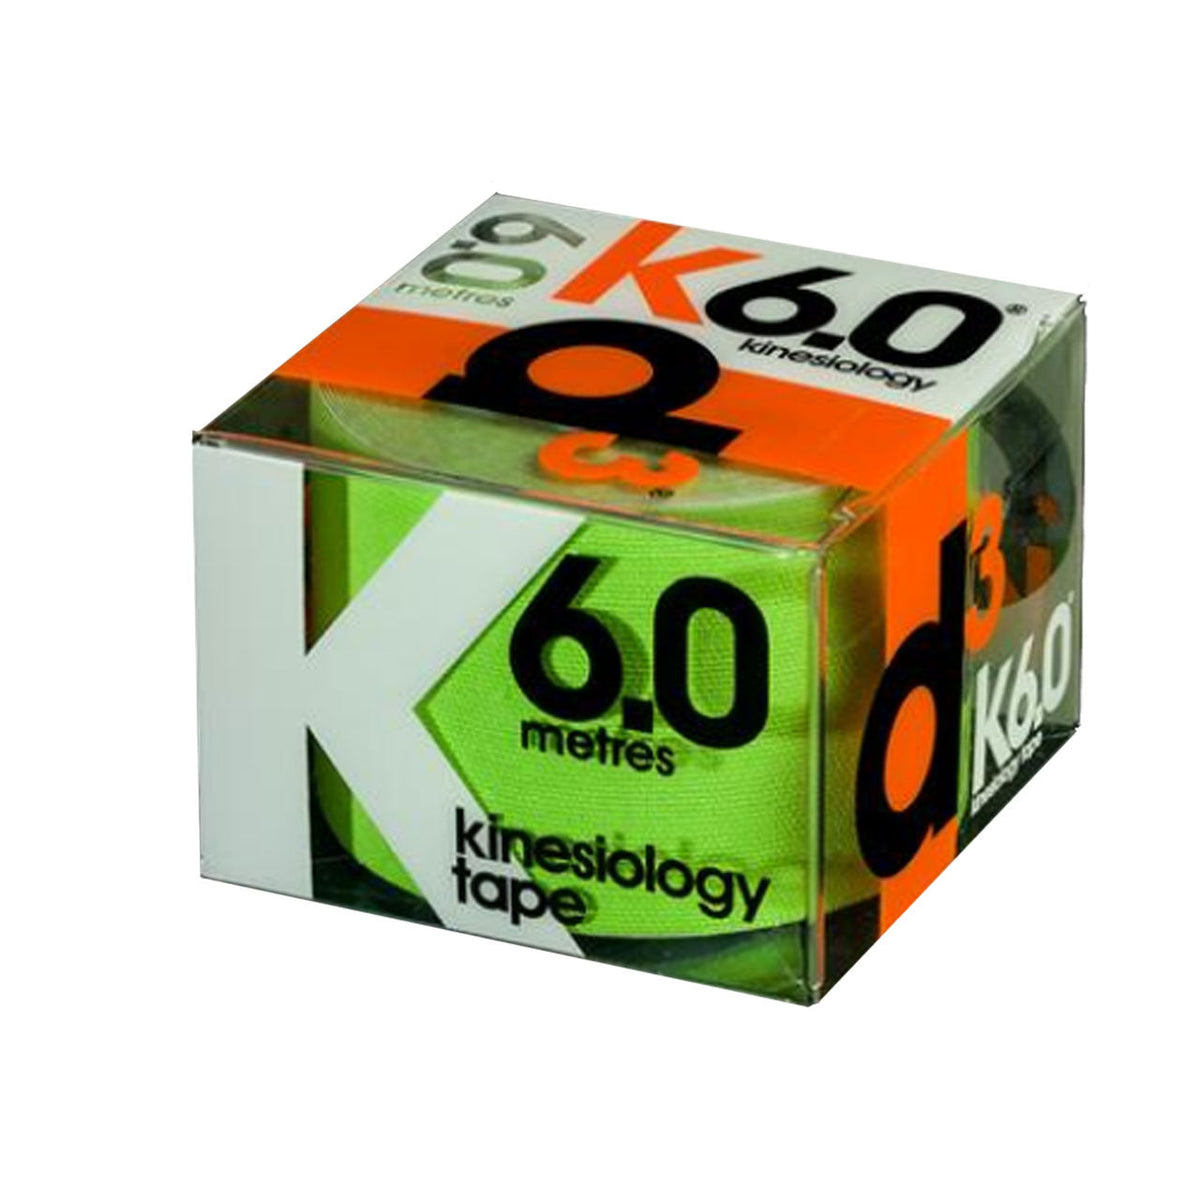 D3 K6.0 Kinesiology Tape (Green)